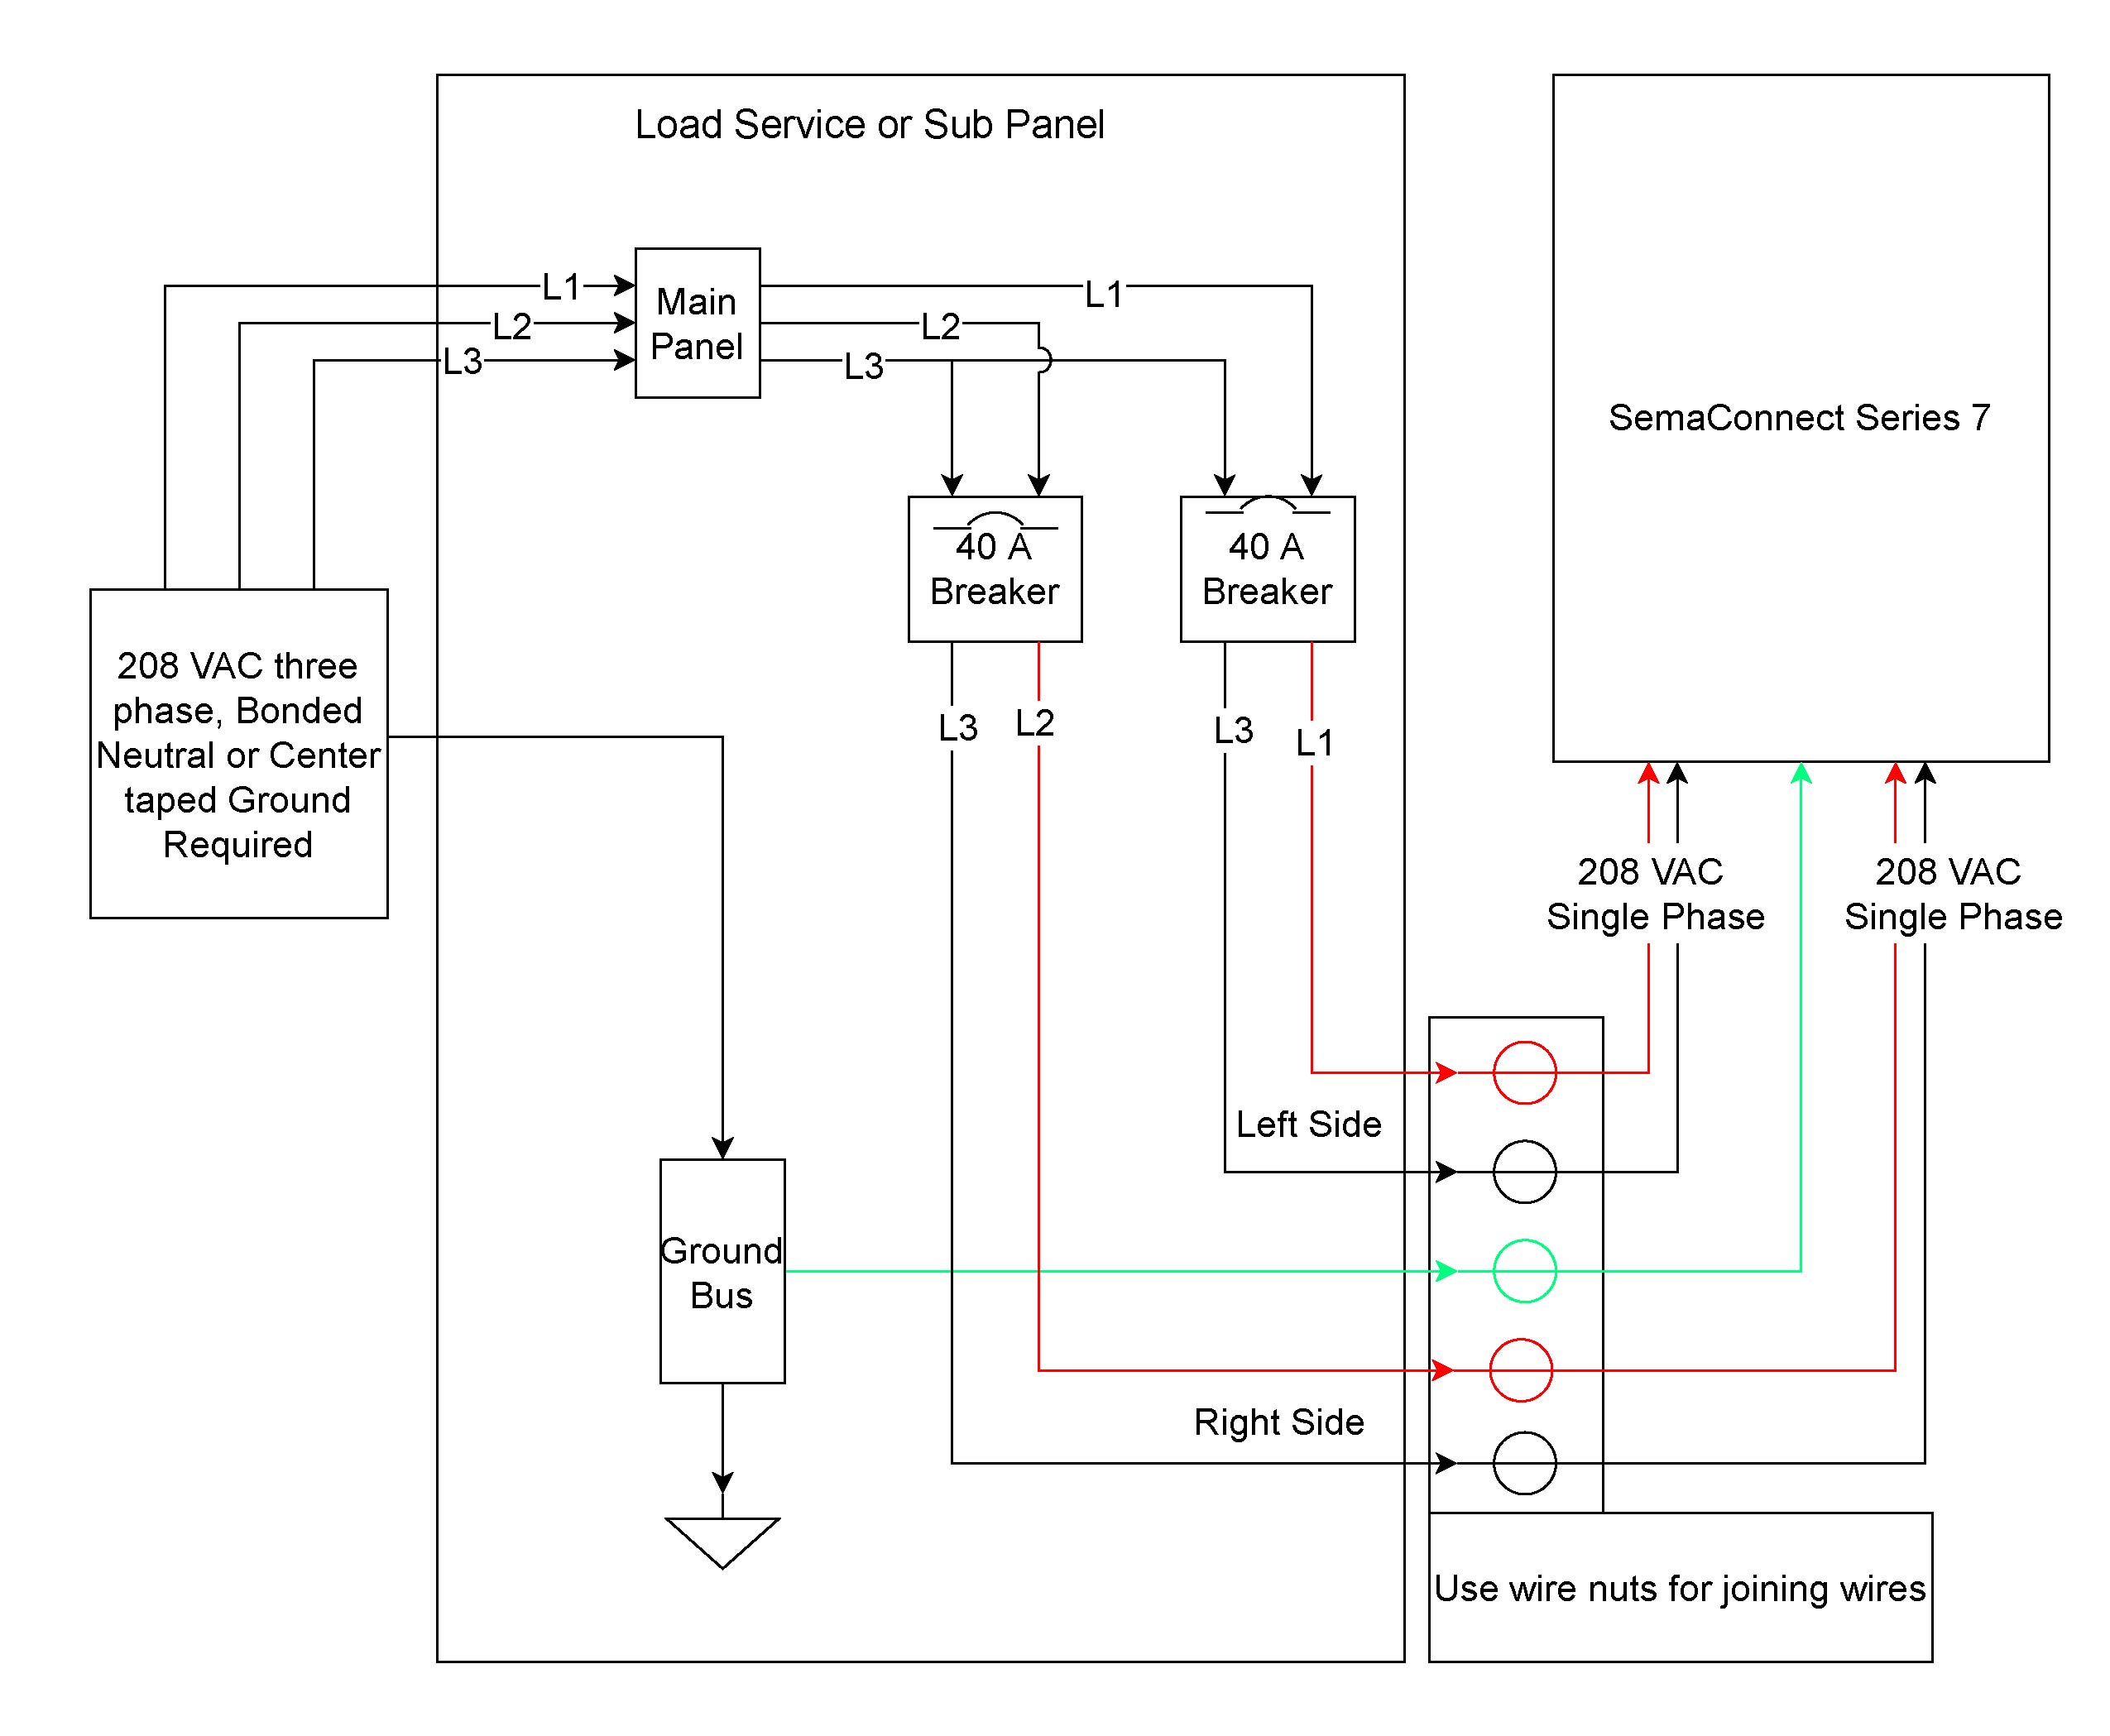 fh x700bt wiring diagram